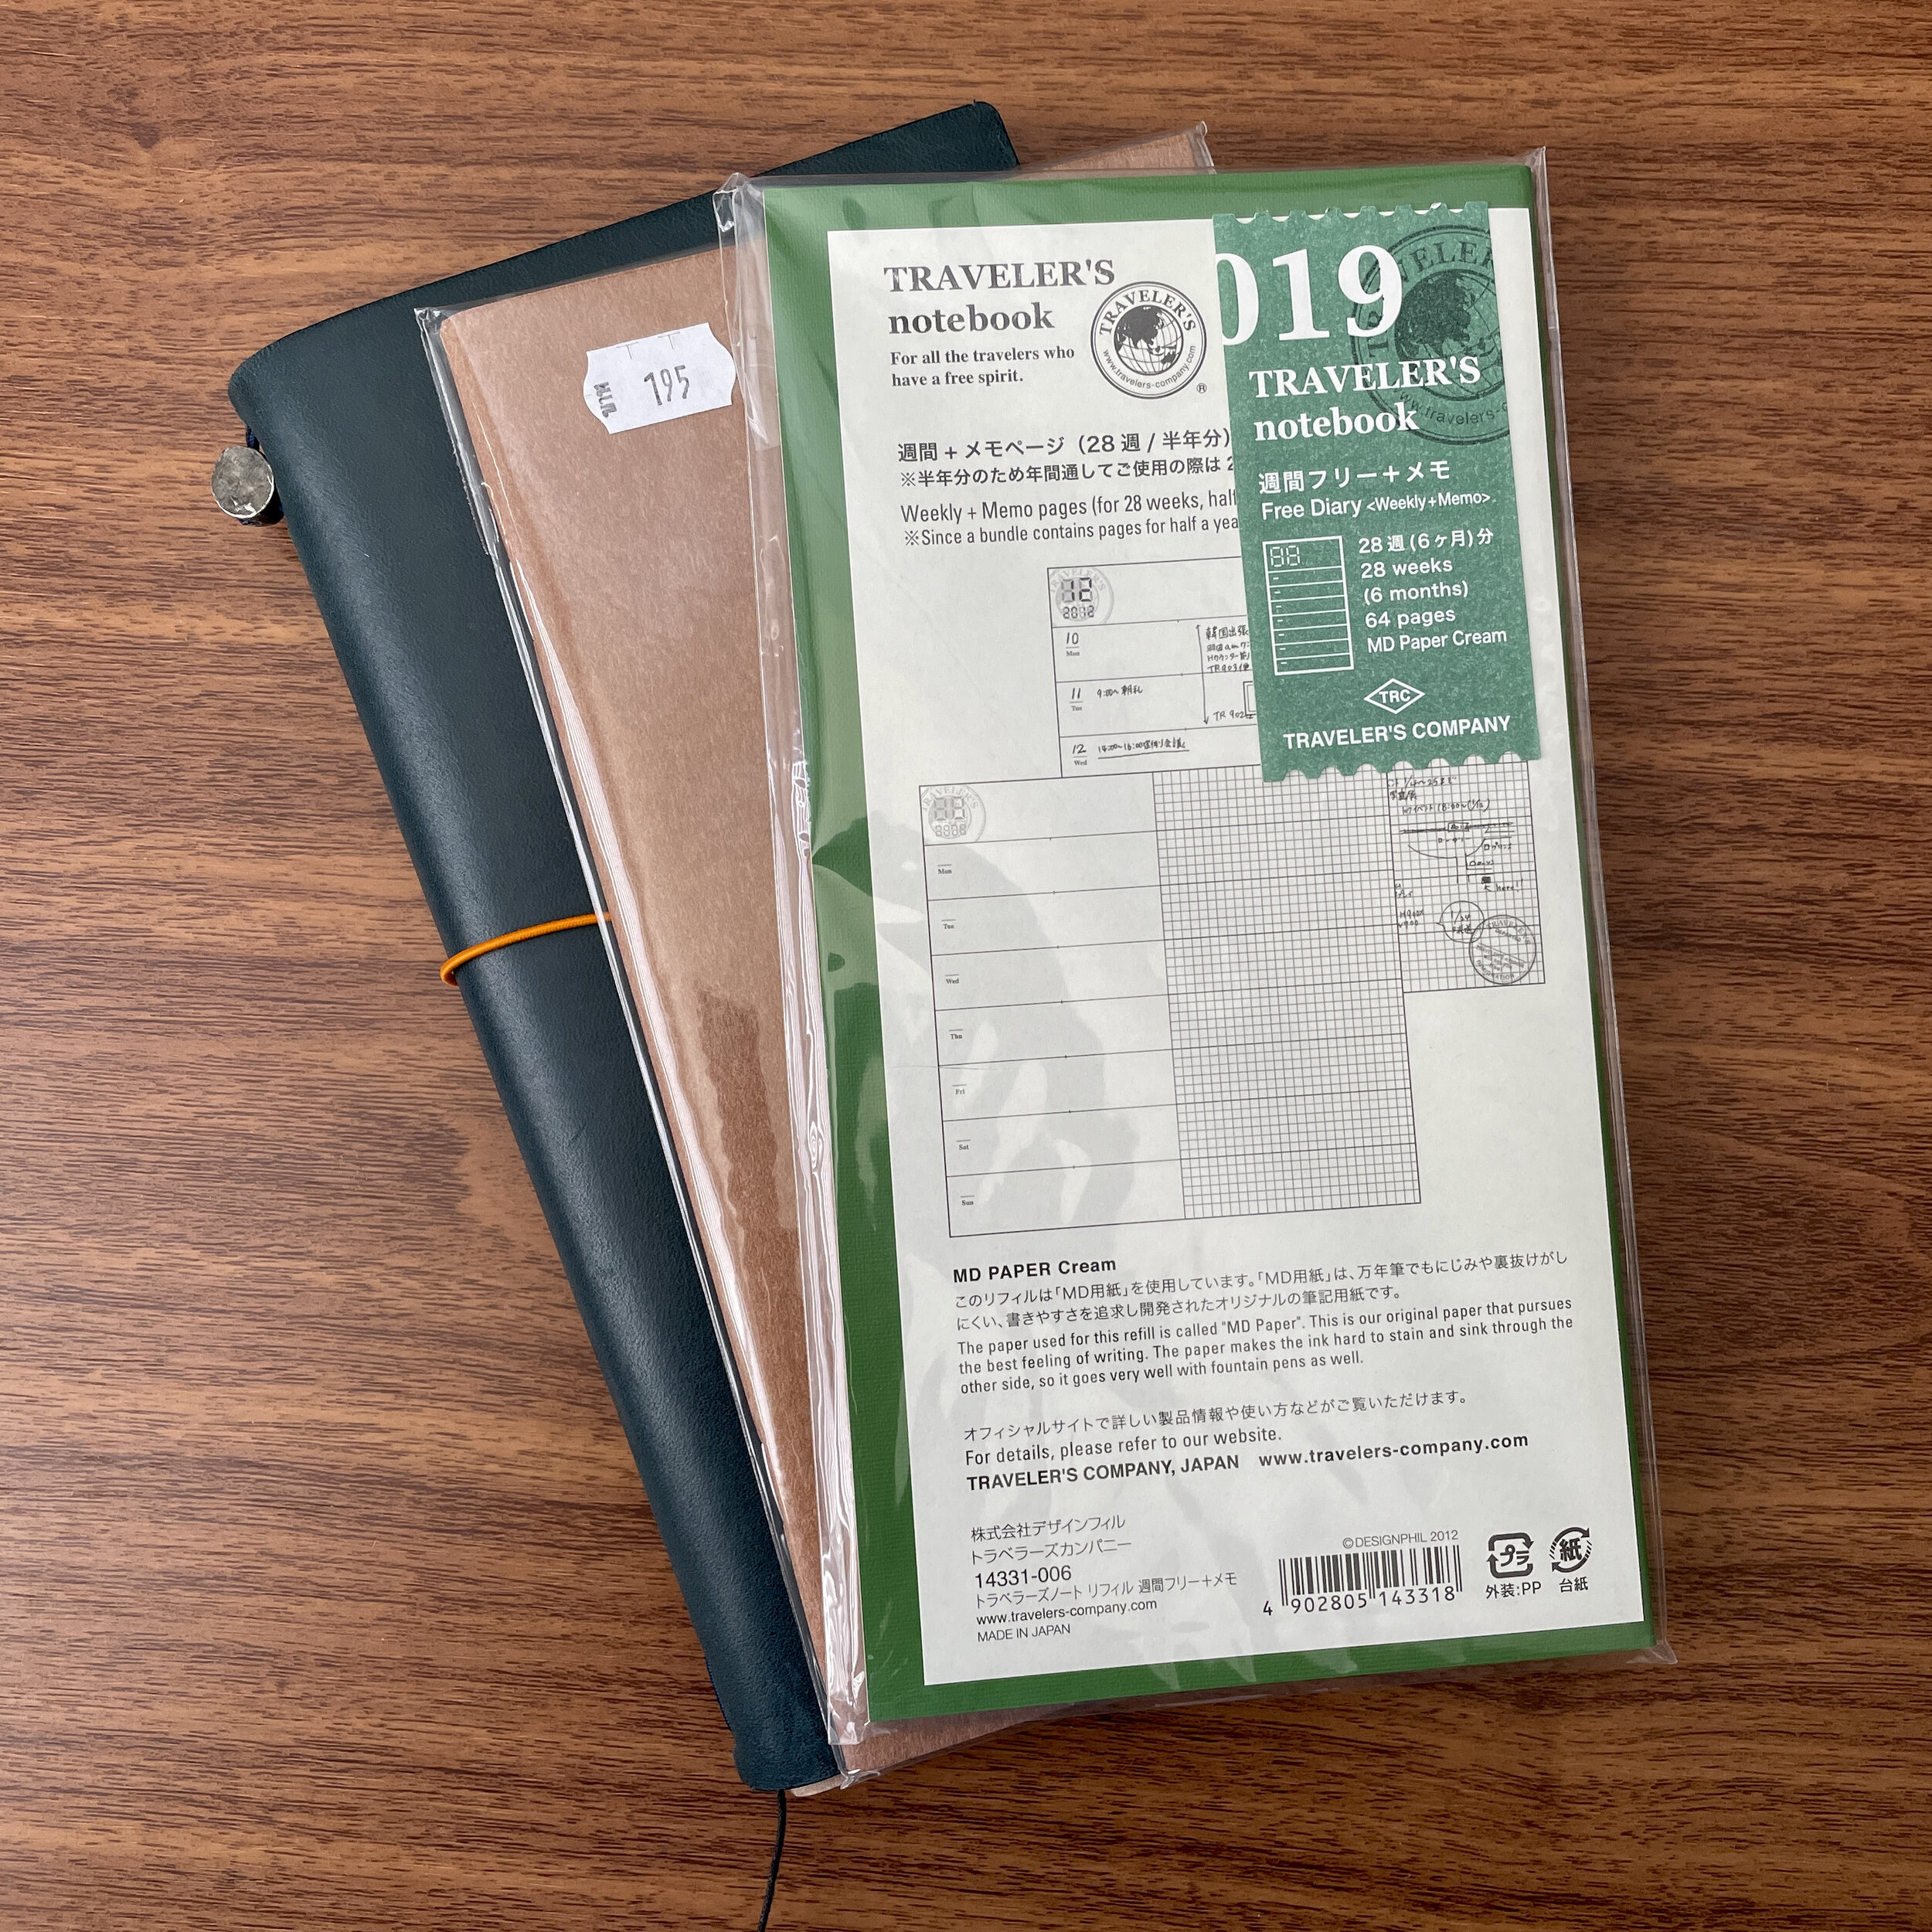 B6 WEEKS Slim Daily View Hobonichi Inspired GRID Bundle Traveler's Notebook Printable Insert for Hobonichi WEEKS Size Planner